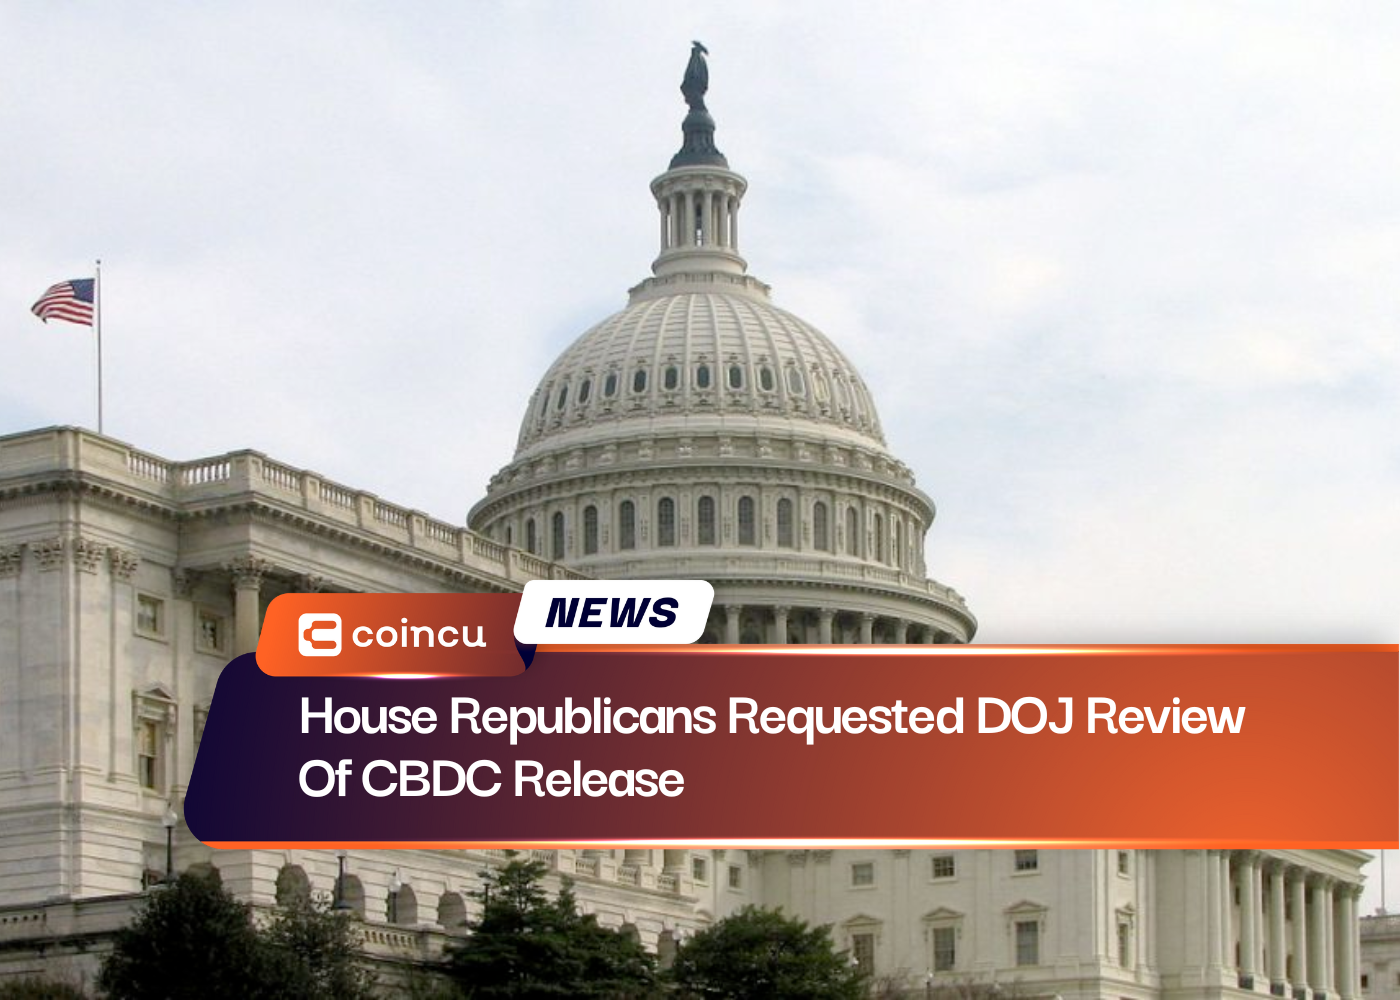 House Republicans Requested DOJ Review Of CBDC Release